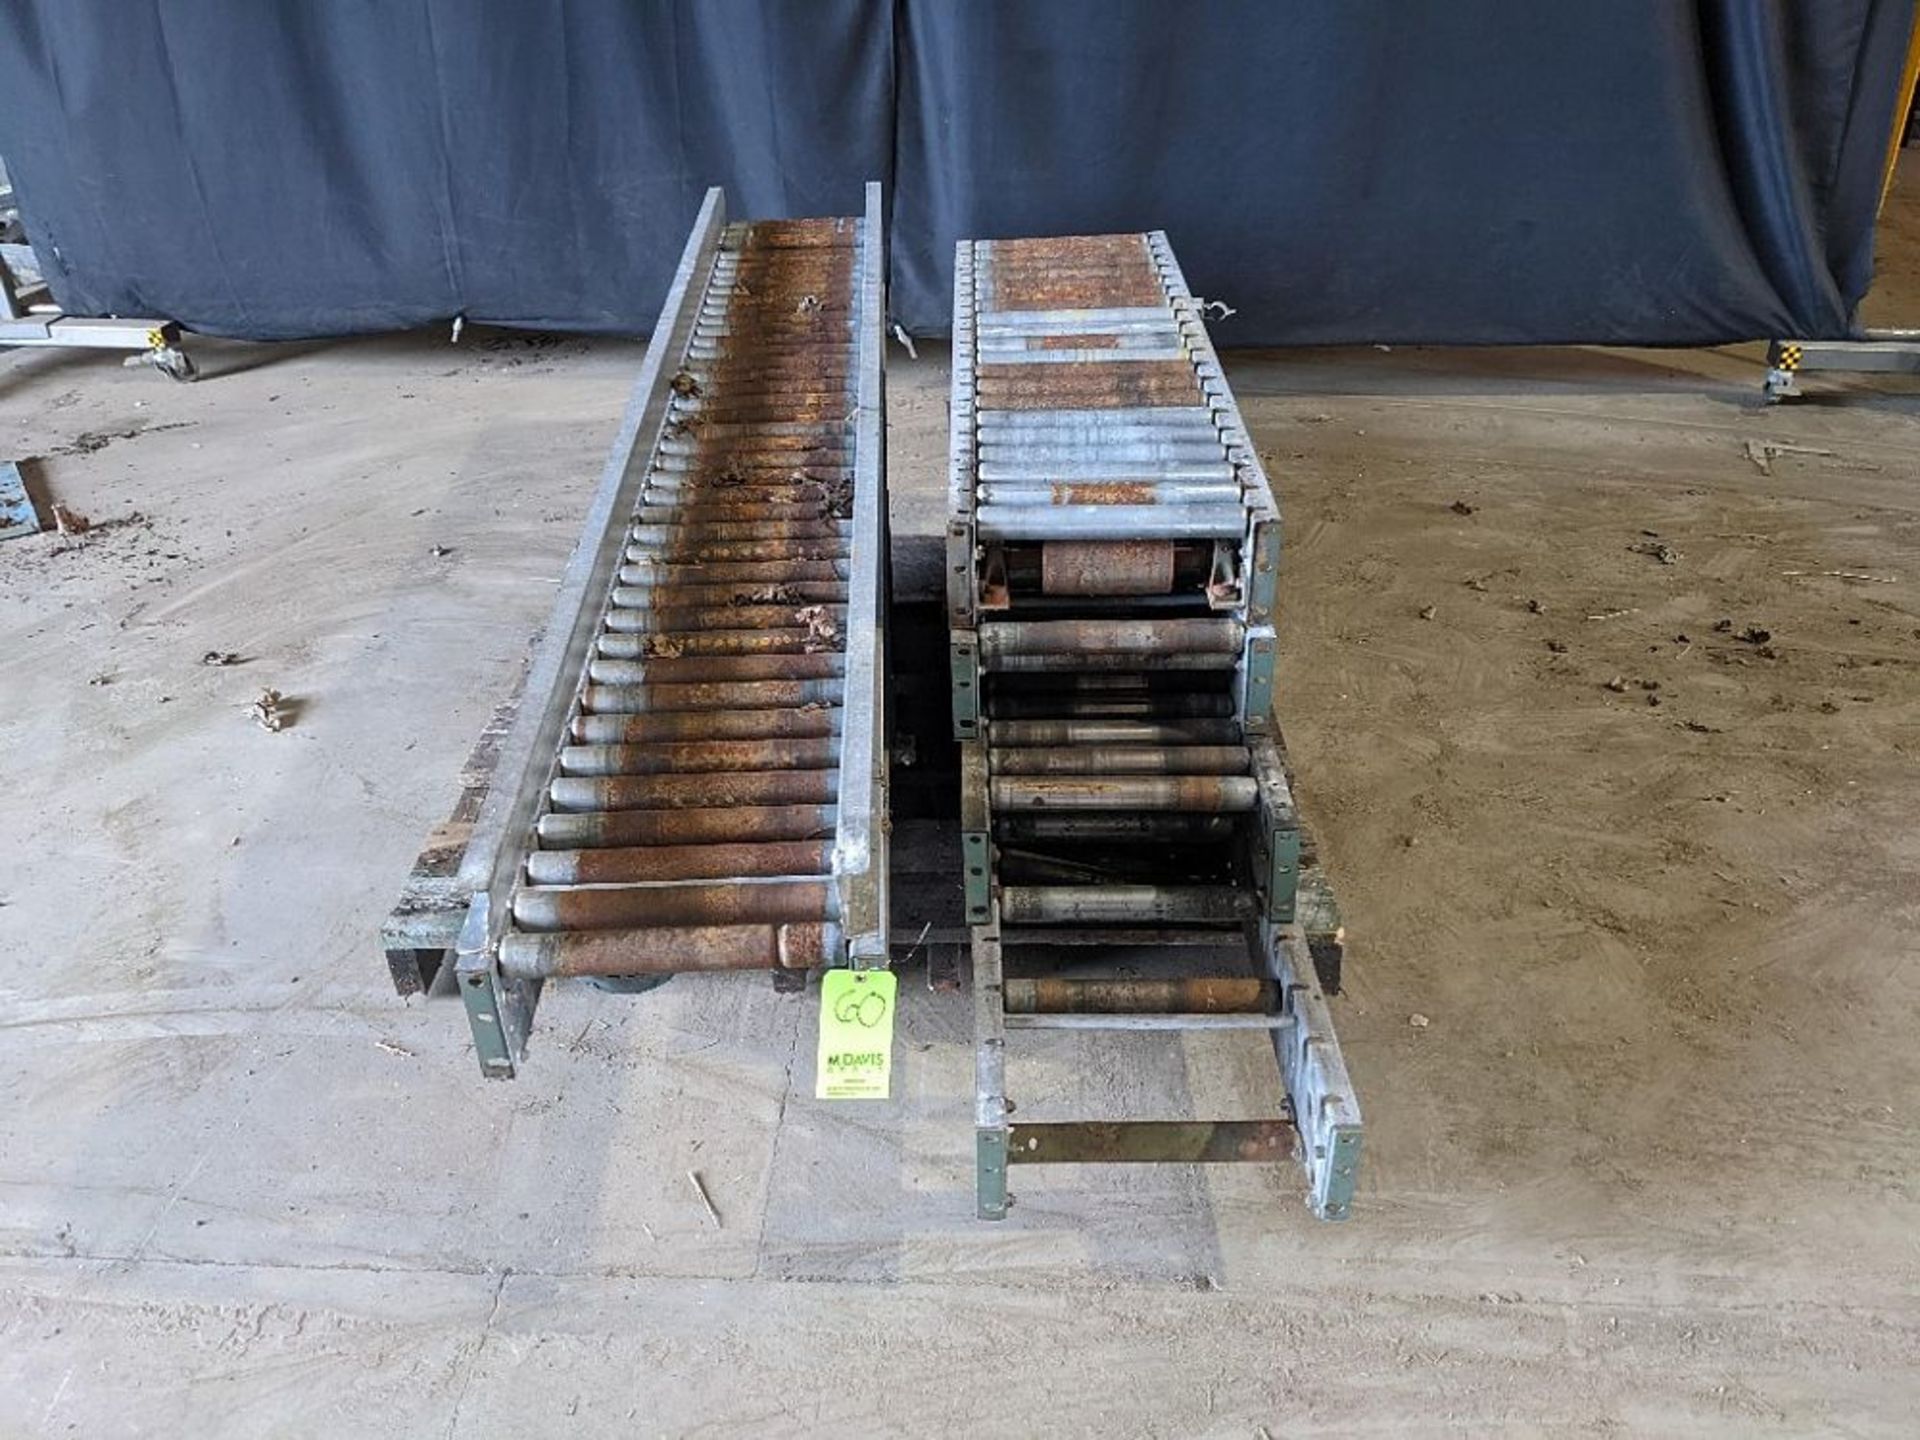 Hytrol Roller Case Conveyor sectios w/ Drive - 1 secion144" L x 16" W Roller Conveyor -1 section 25"